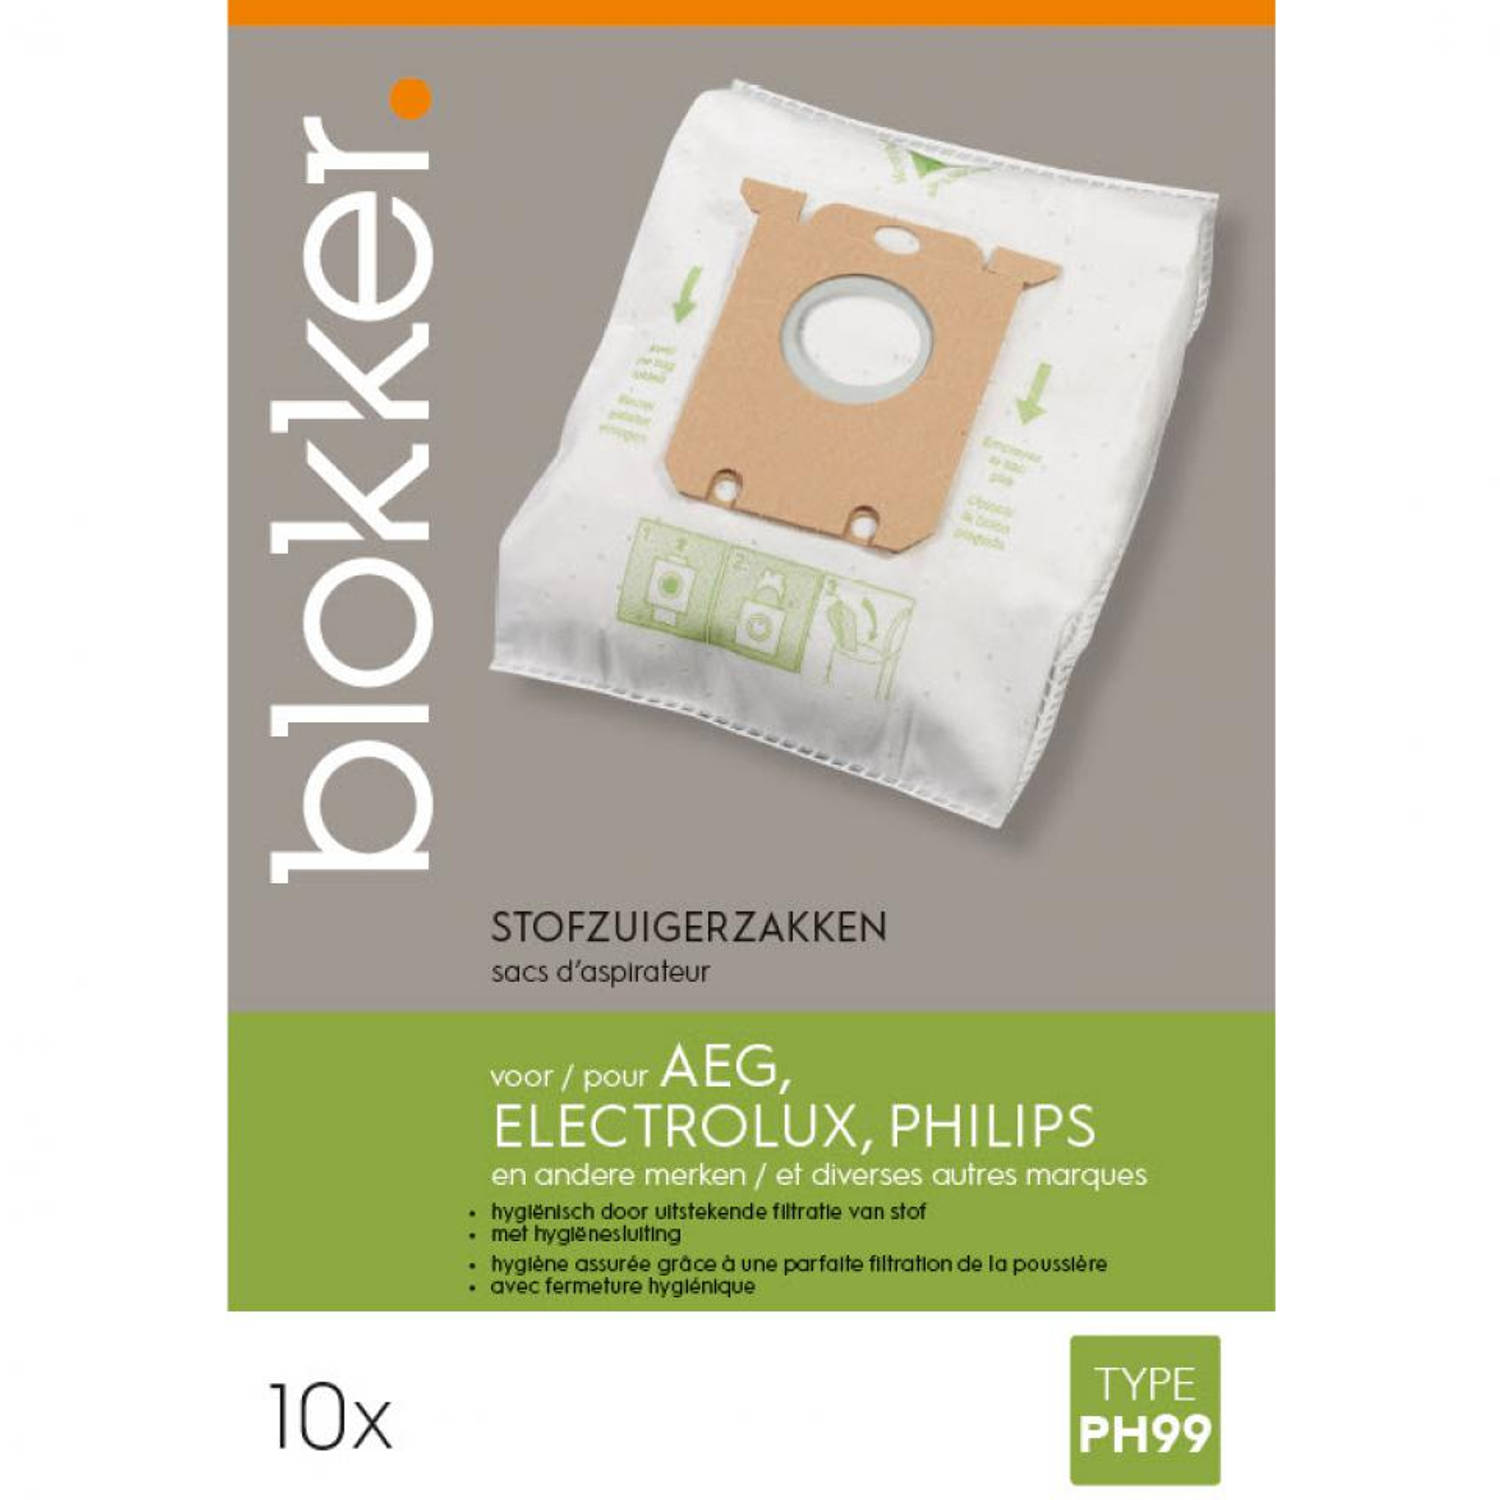 ochtendgloren Publicatie deelnemen Blokker stofzuigerzak AEG, Electrolux, Philips s-bag ph99 - 10 stuks |  Blokker